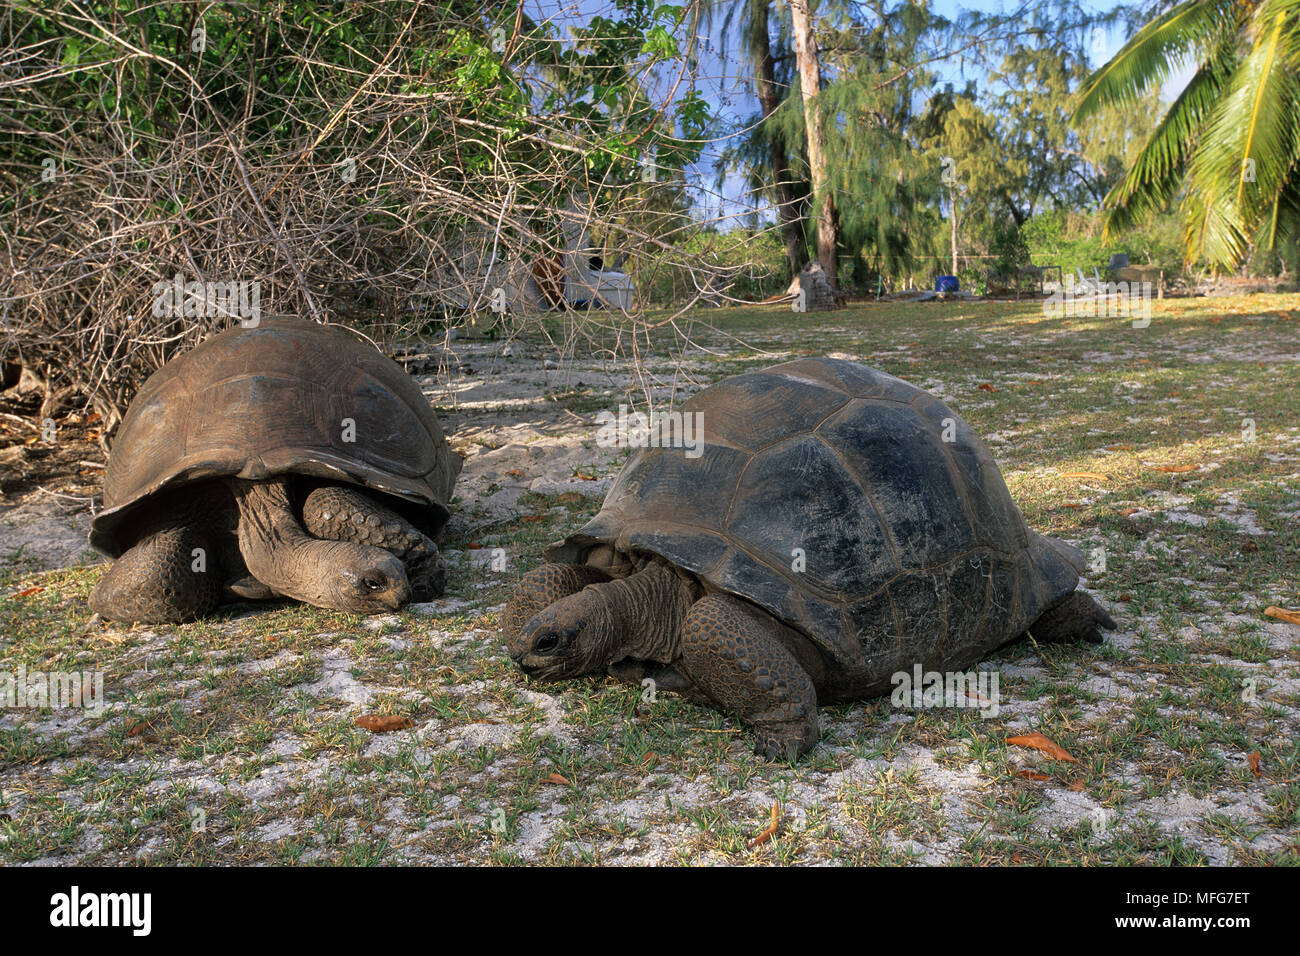 Paio di tartaruga gigante, Geochelone gigantea, Aldabra Atoll, patrimonio mondiale naturale, Seychelles, Oceano Indiano Data: 24.06.08 RIF: ZB777 115635 Foto Stock